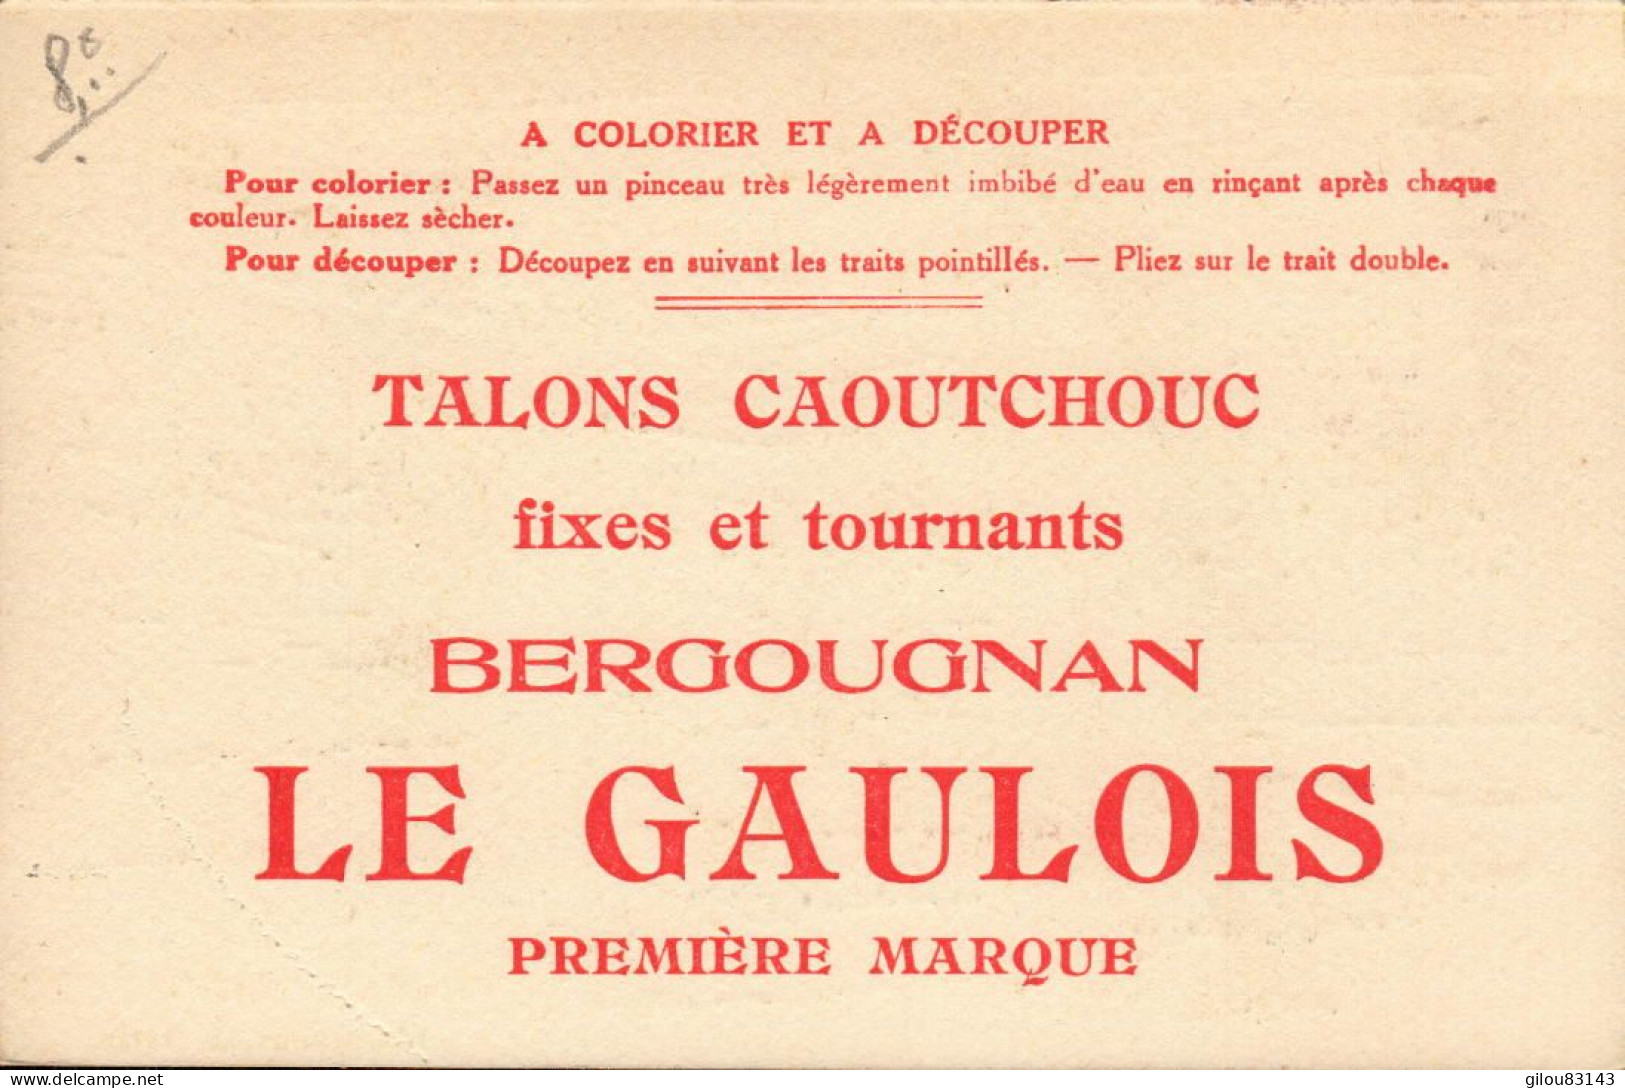 Bergougnan, Le Gaulois, Talons Caoutchouc, Illustration Sport, Golf - Advertising